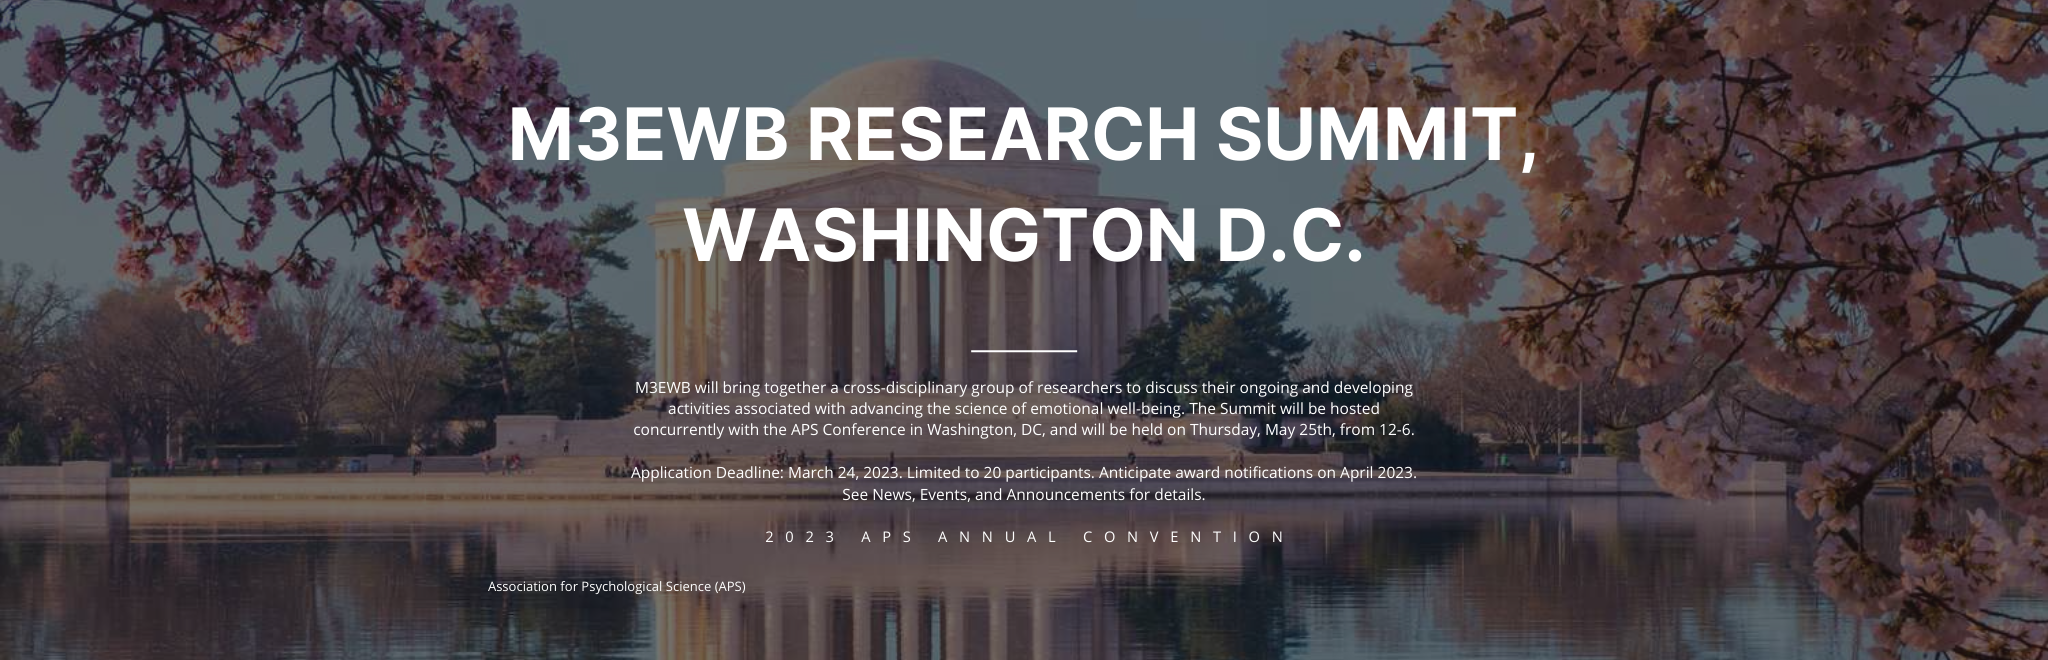 M3EWB Research Summit, Washington D.C.